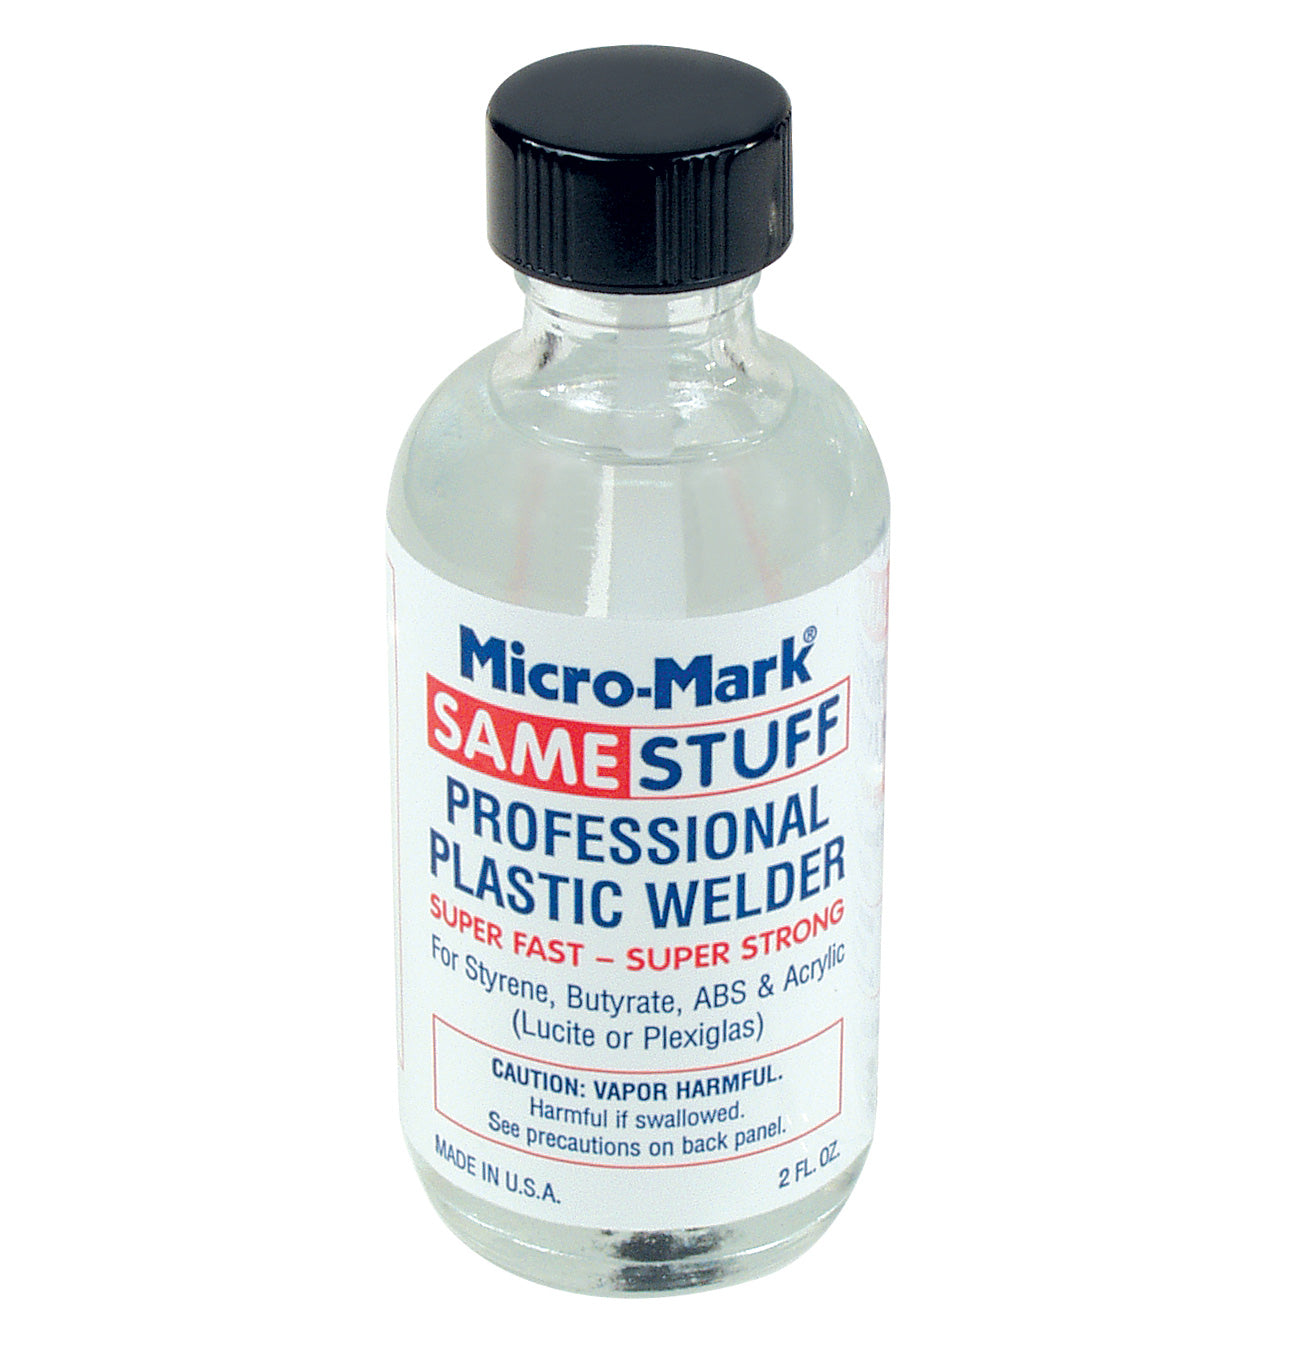 Micro-Mark #84113 - Same Stuff Professional Plastic Welder (2 Oz)